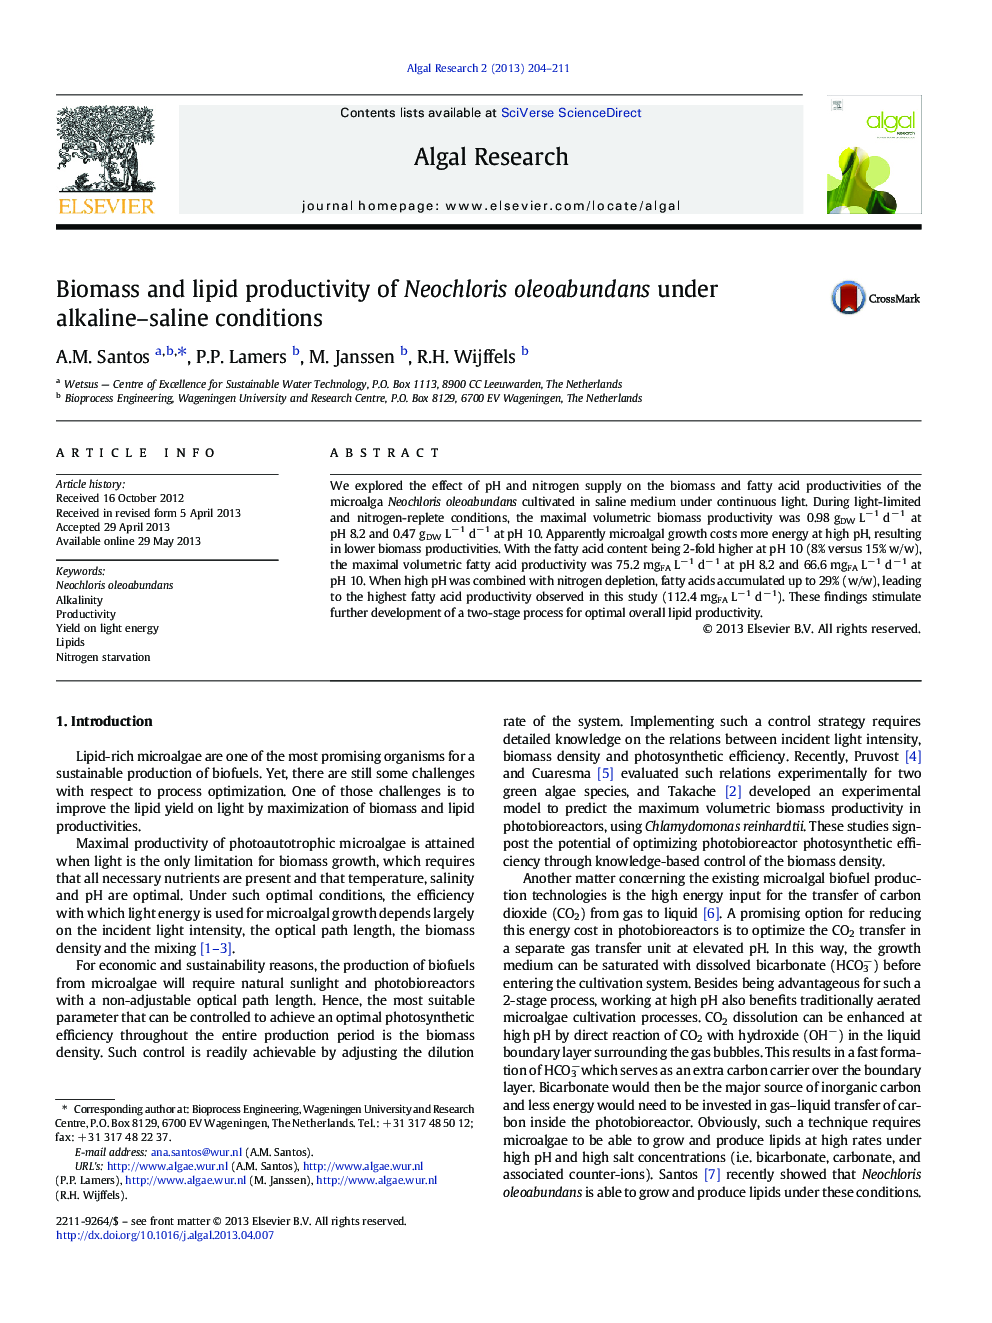 Biomass and lipid productivity of Neochloris oleoabundans under alkaline–saline conditions